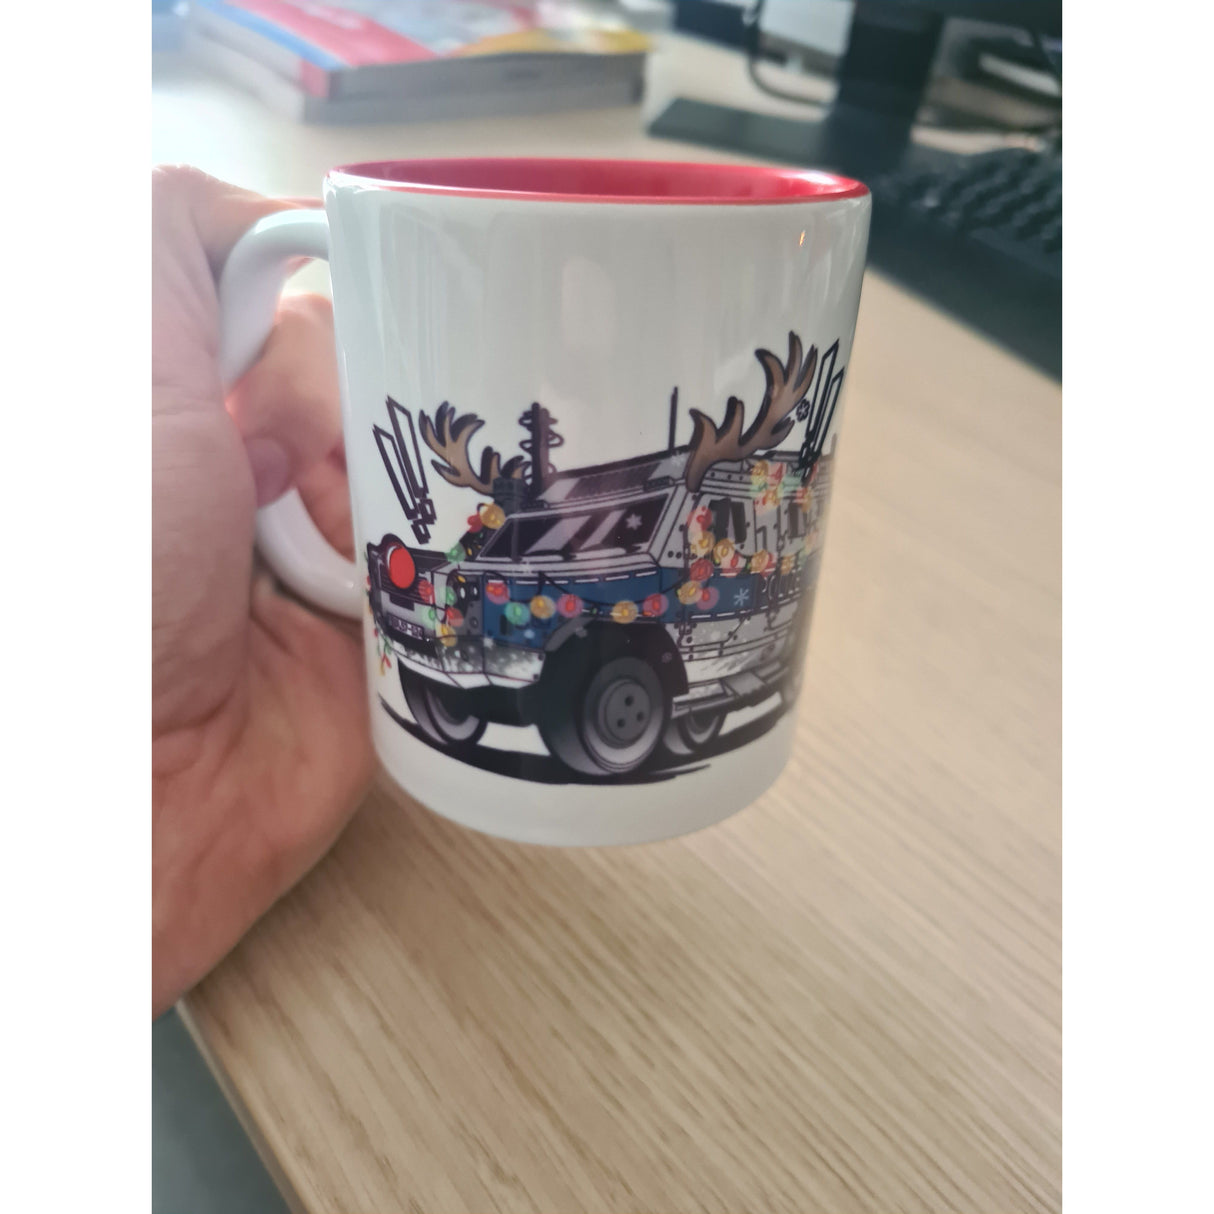 Cop Wheels mug